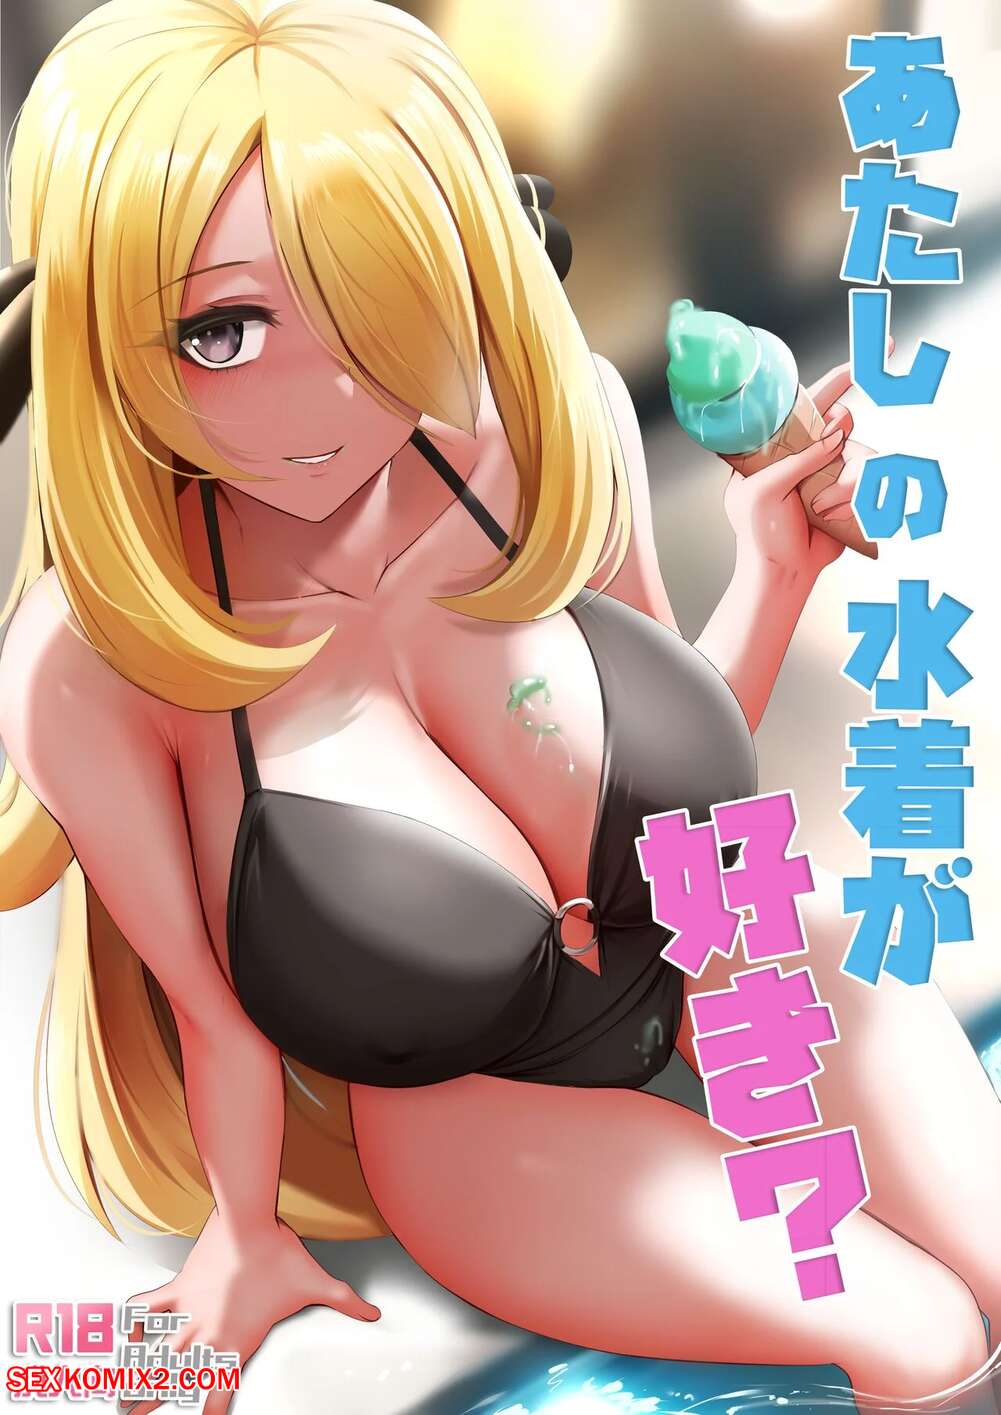 Super Sexy Swimsuit Anime Girls In Porn - âœ…ï¸ Porn comic Do You Like My Swimsuit. Pokemon Sex comic hot blonde beauty  | Porn comics in English for adults only | sexkomix2.com